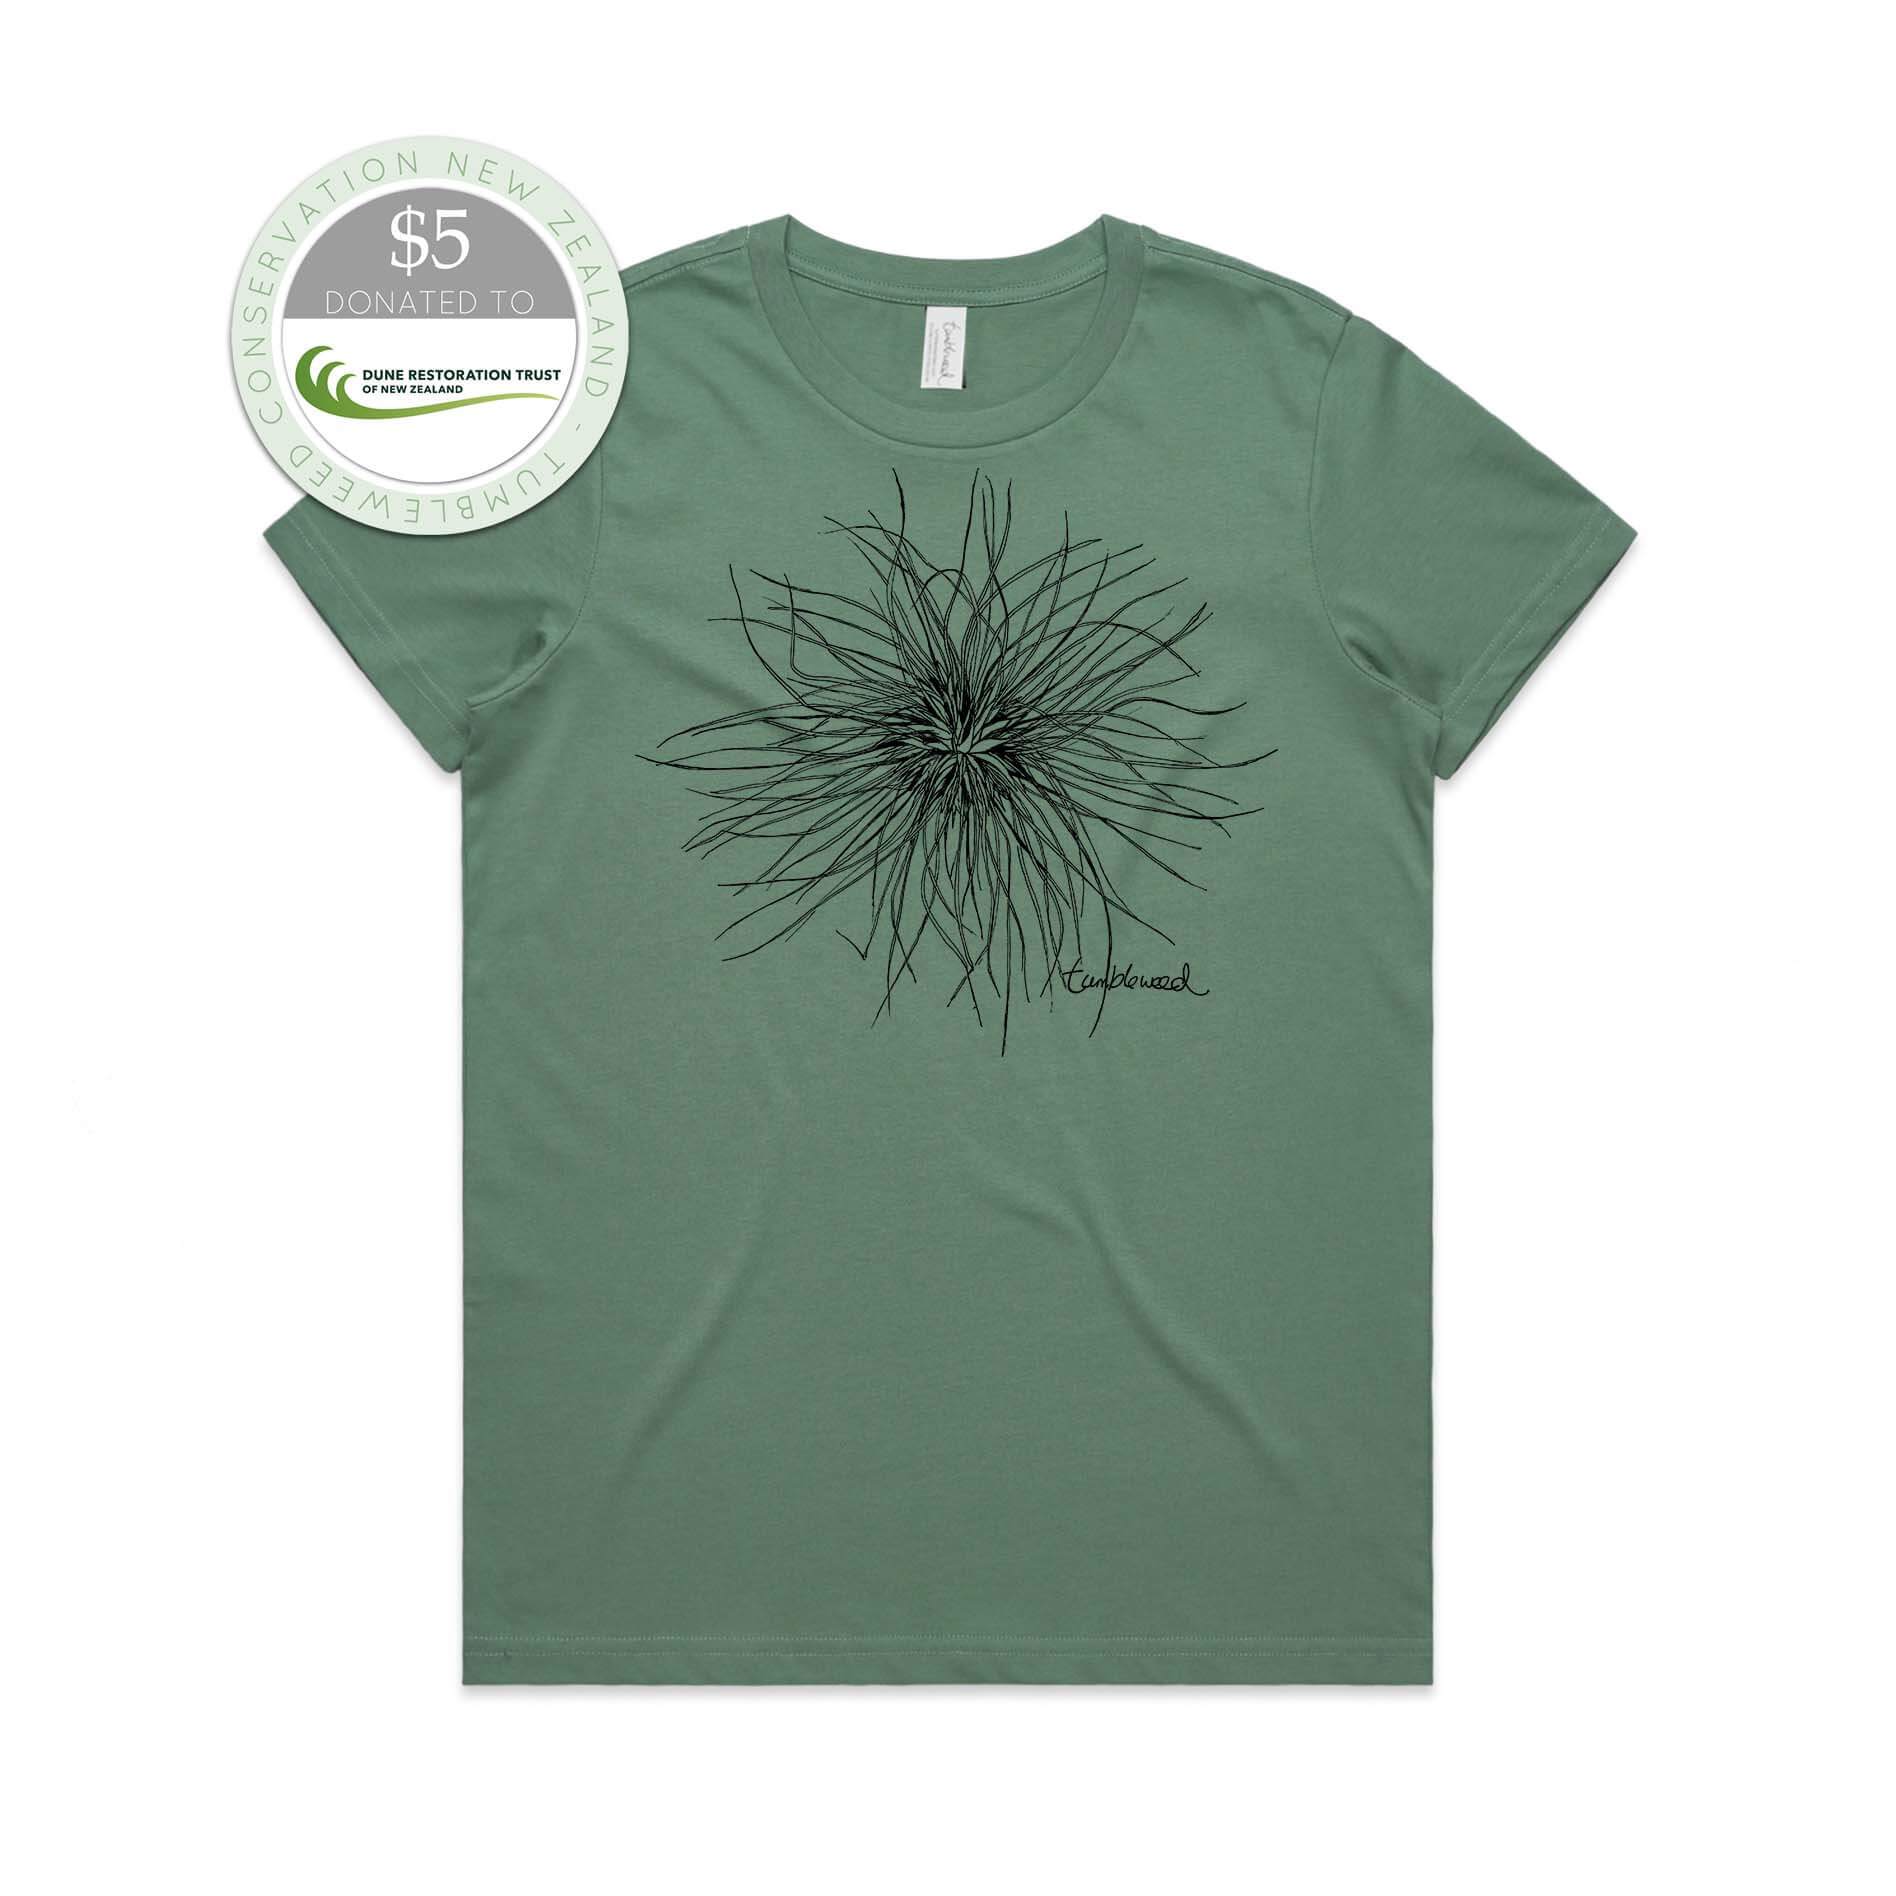 Sage, female t-shirt featuring a screen printed Tumbleweed design.